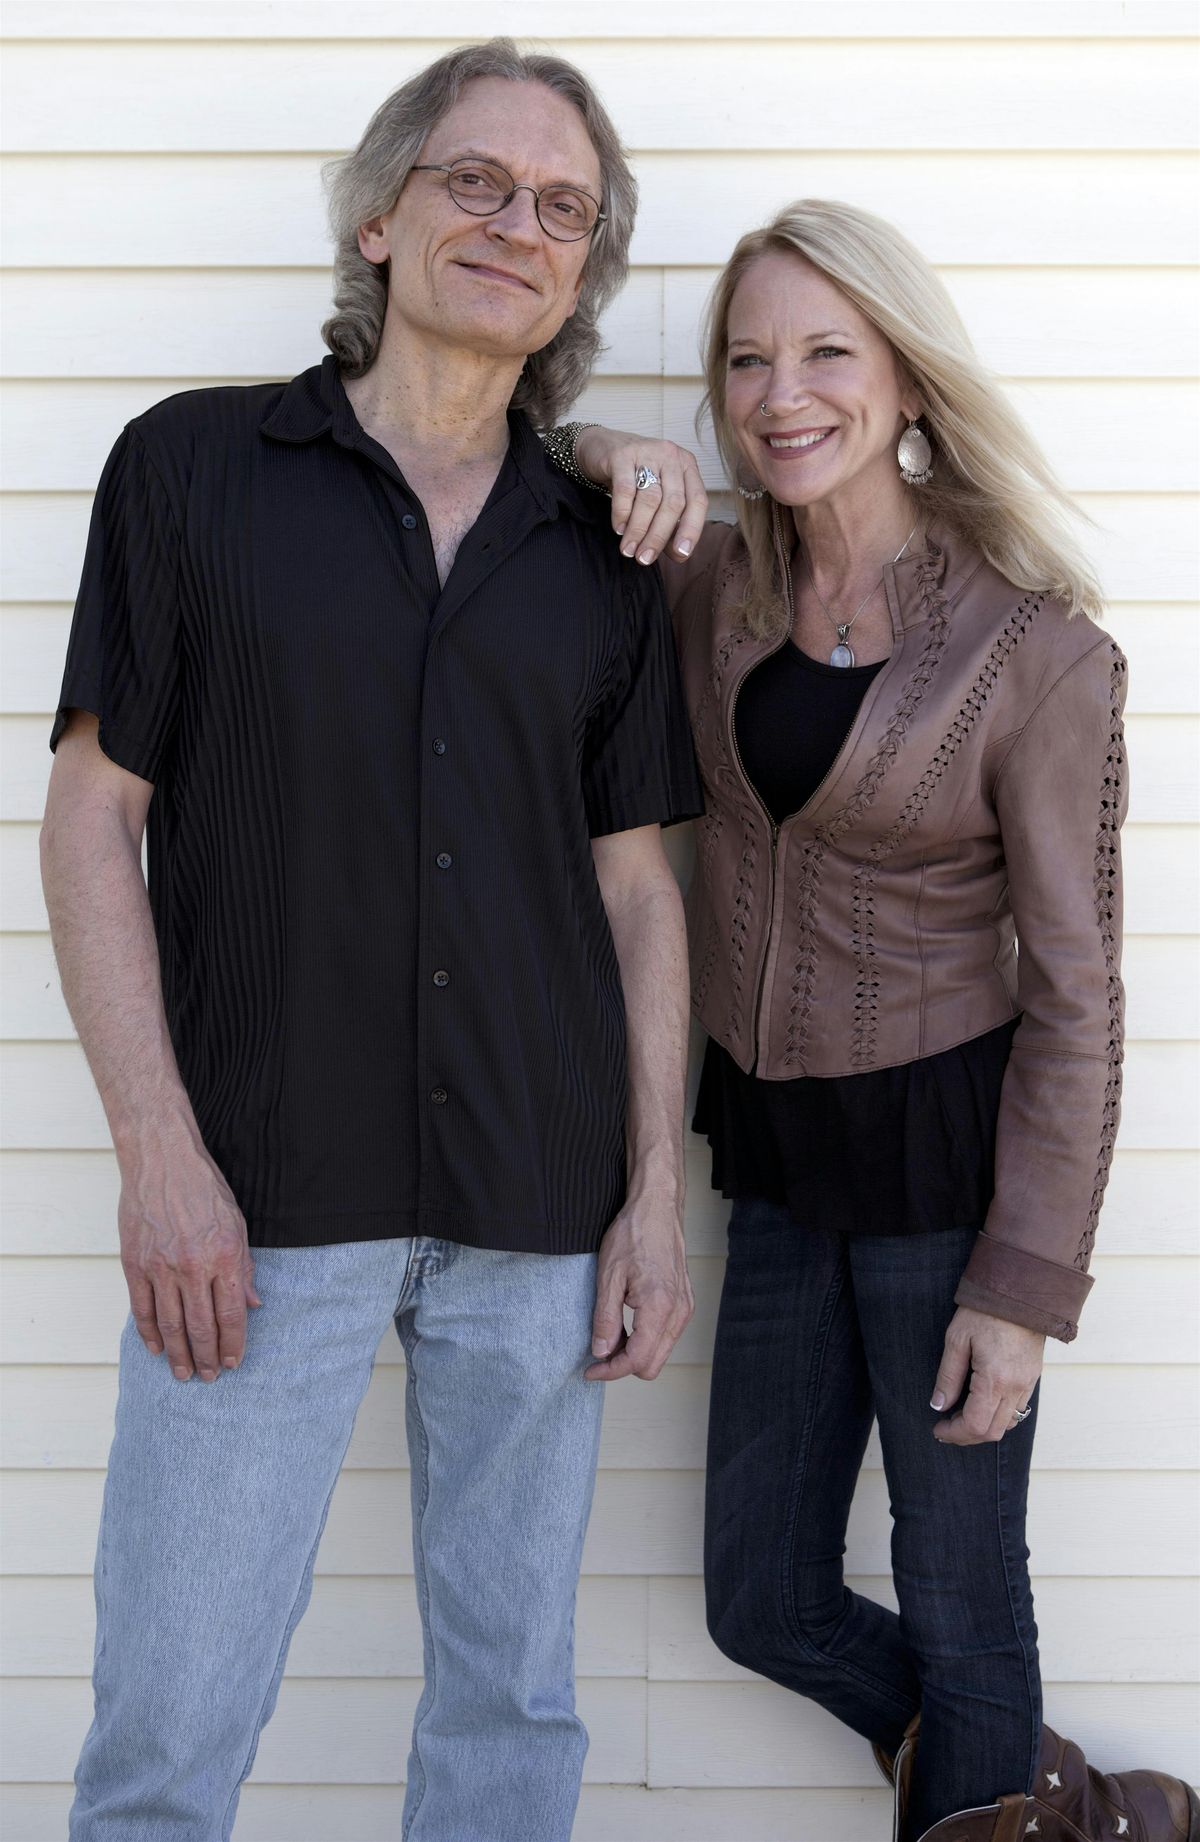 Sonny Landreth and Cindy Cashdollar